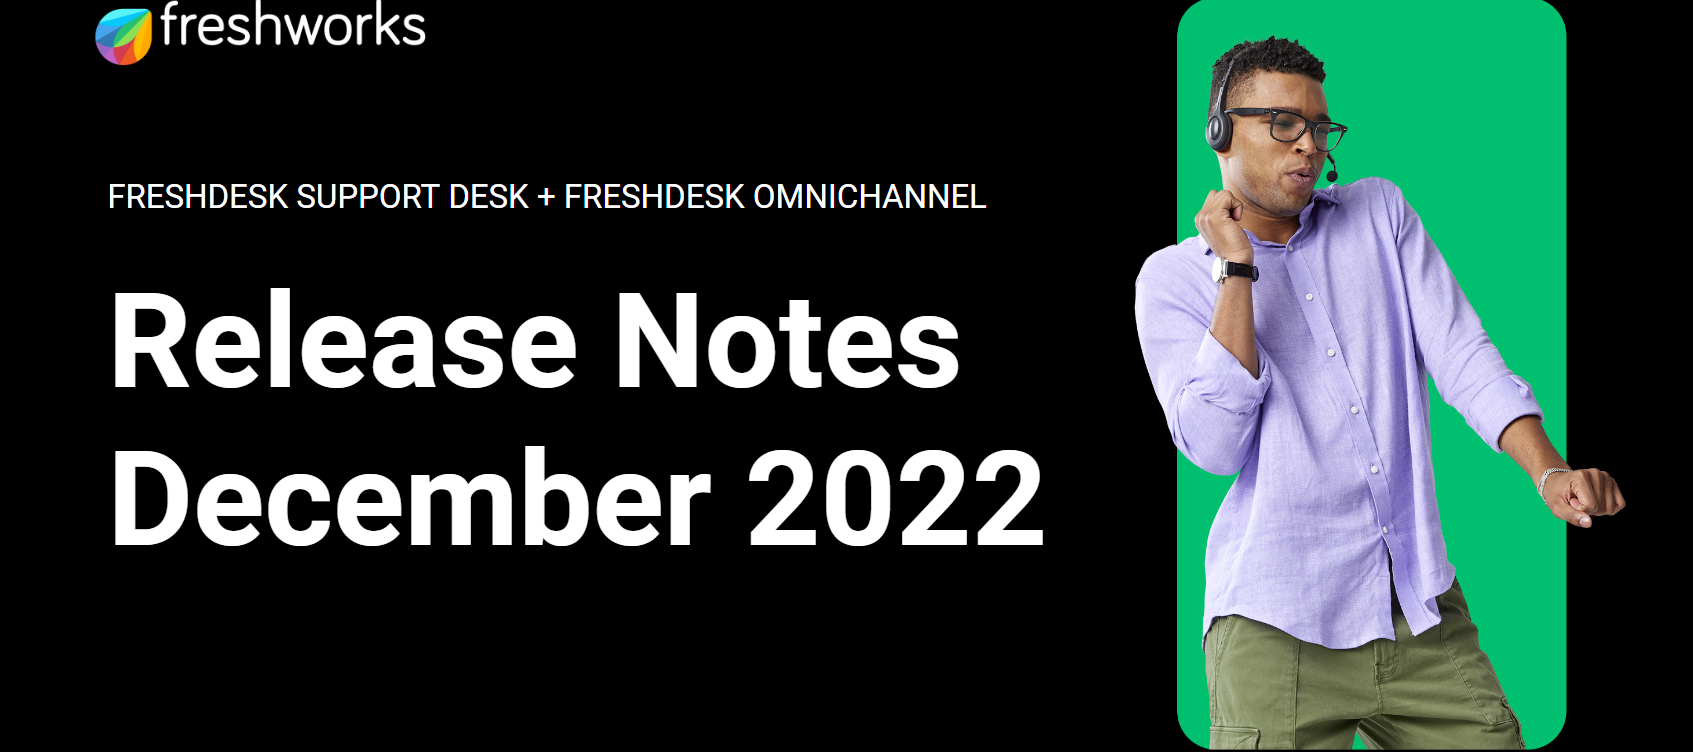 Freshdesk and Freshdesk Omnichannel Release Notes - December 2022